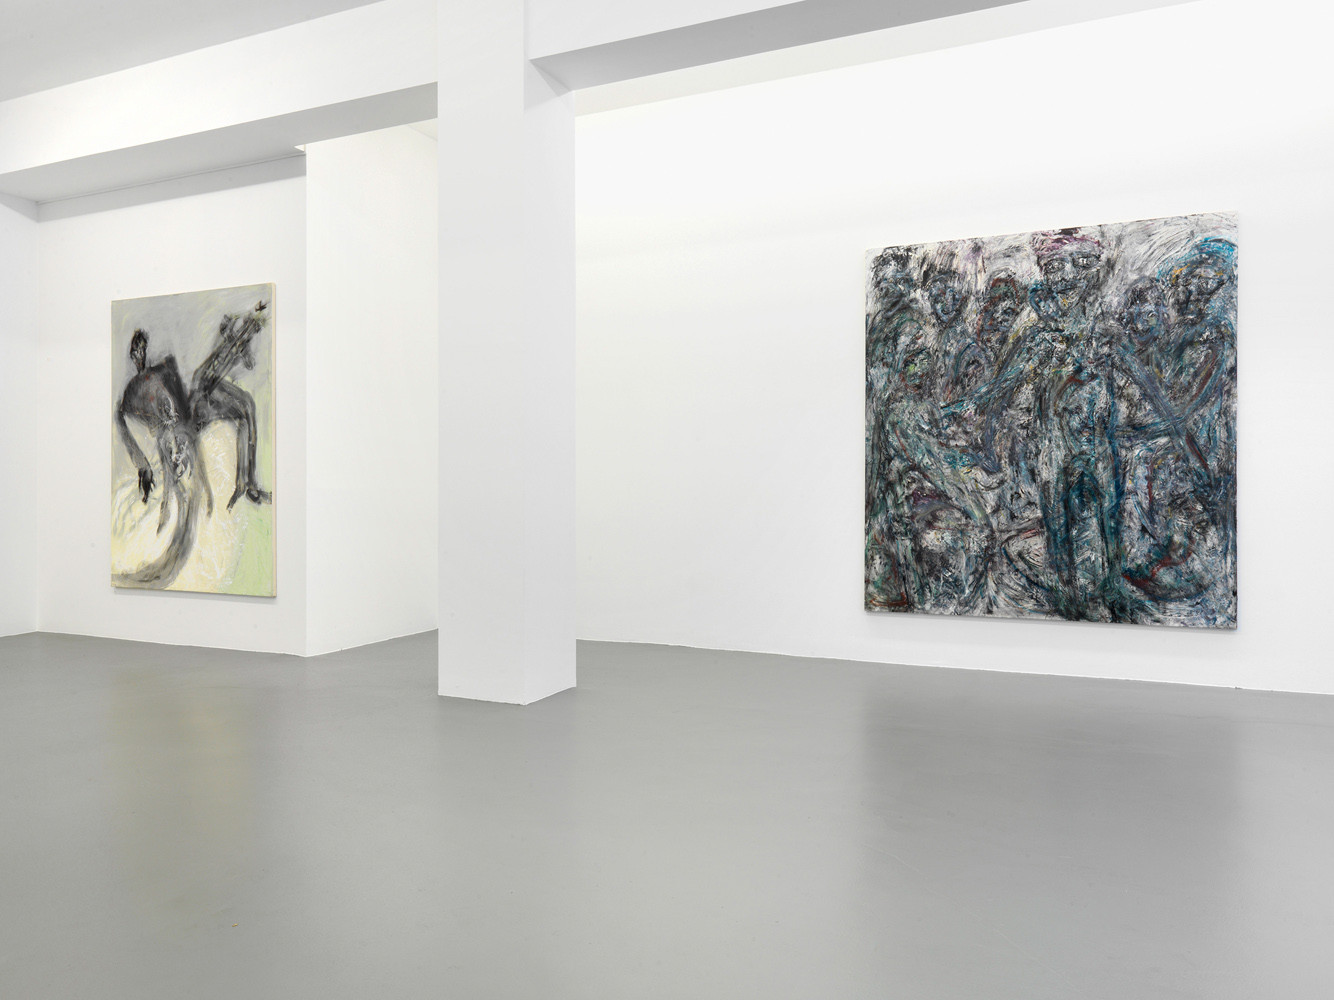 Martin Disler, ‘Malerei’, Installationsansicht, 2014